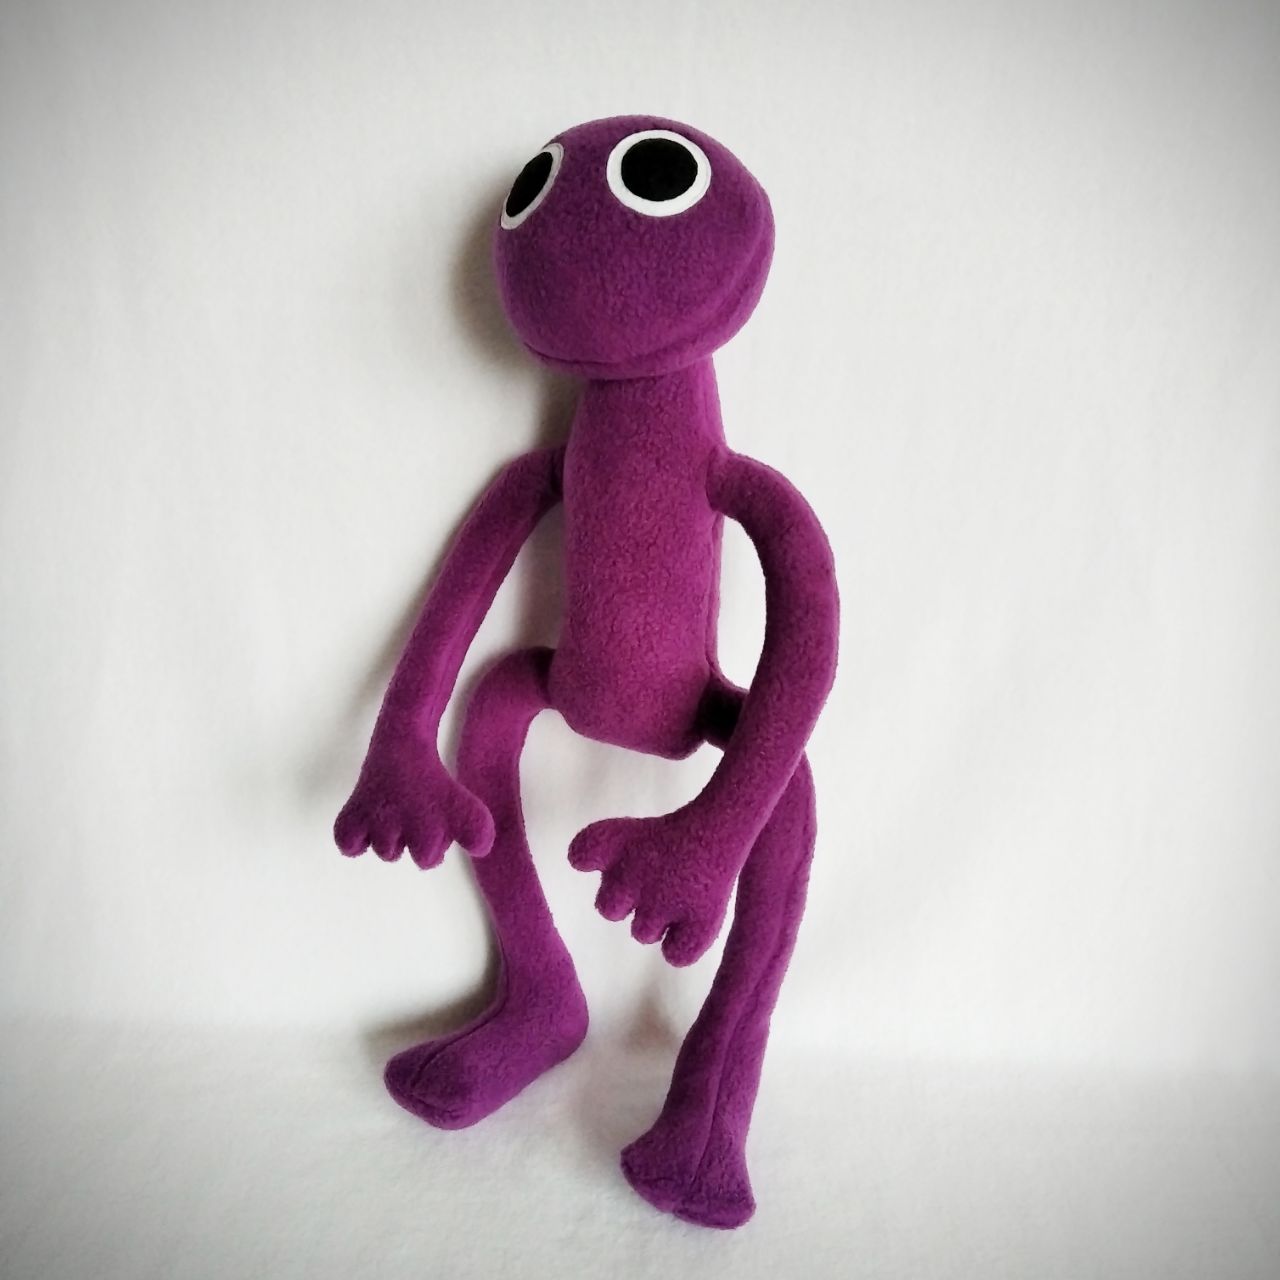 Ravelry: Roblox Rainbow Friends Purple doll pattern by nim nim